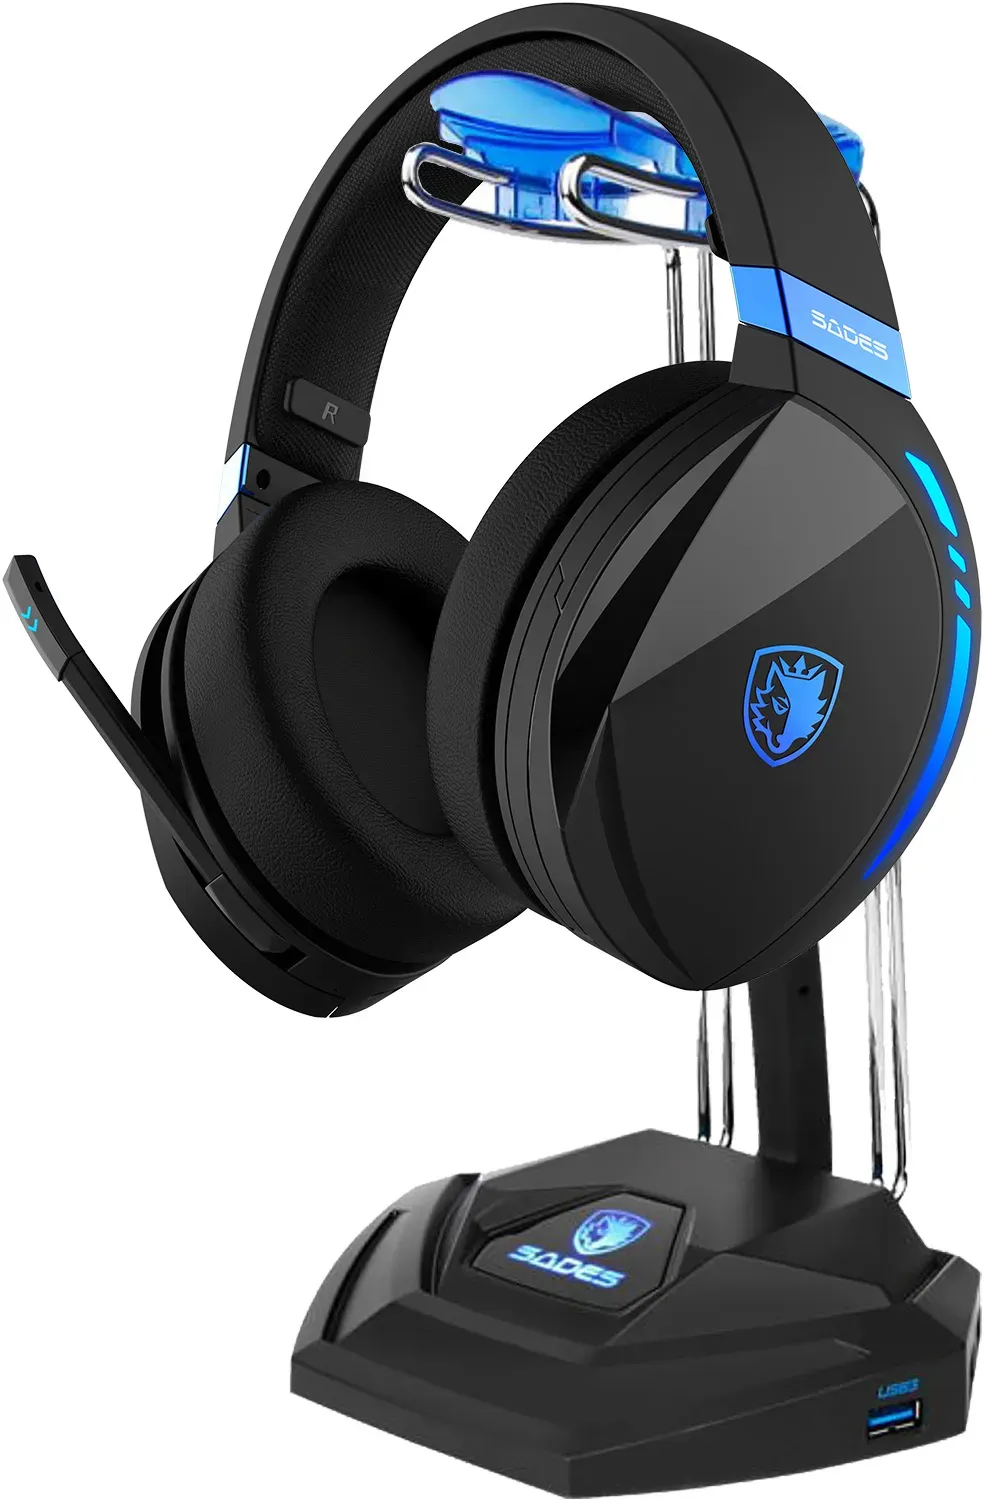 SADES Gaming-Headset "Warden I SA-201 Wireless, schwarz/blau, USB" Kopfhörer inklusive Anubis' Staff Headset Ständer SA-W10, USB schwarz (schwarz, blau) Gaming Headset